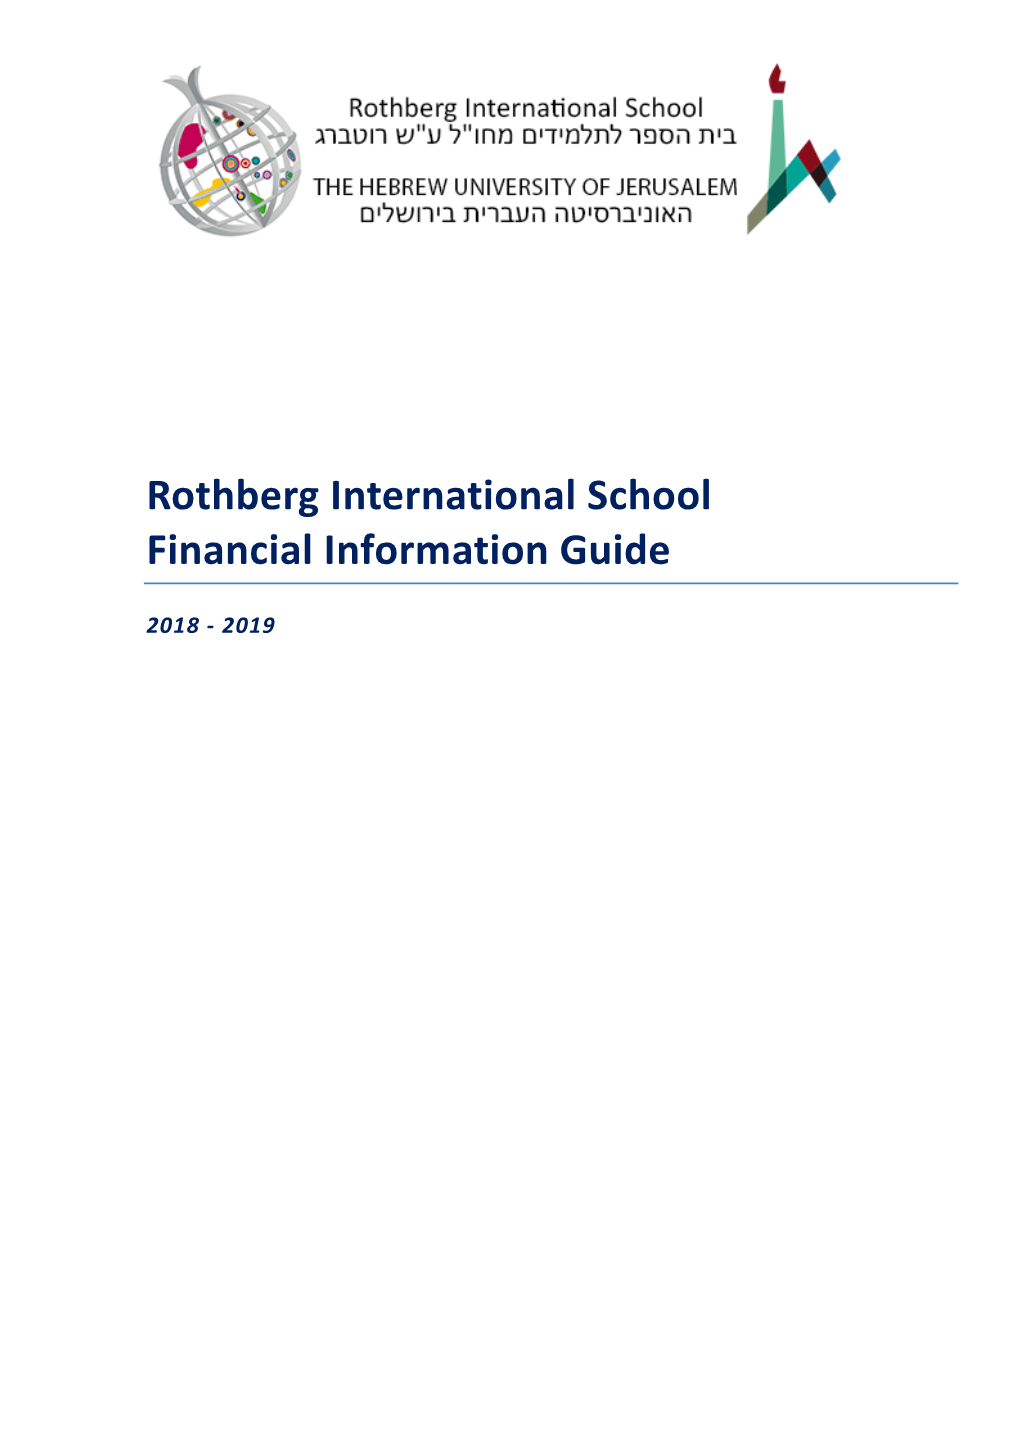 Rothberg International School Financial Information Guide